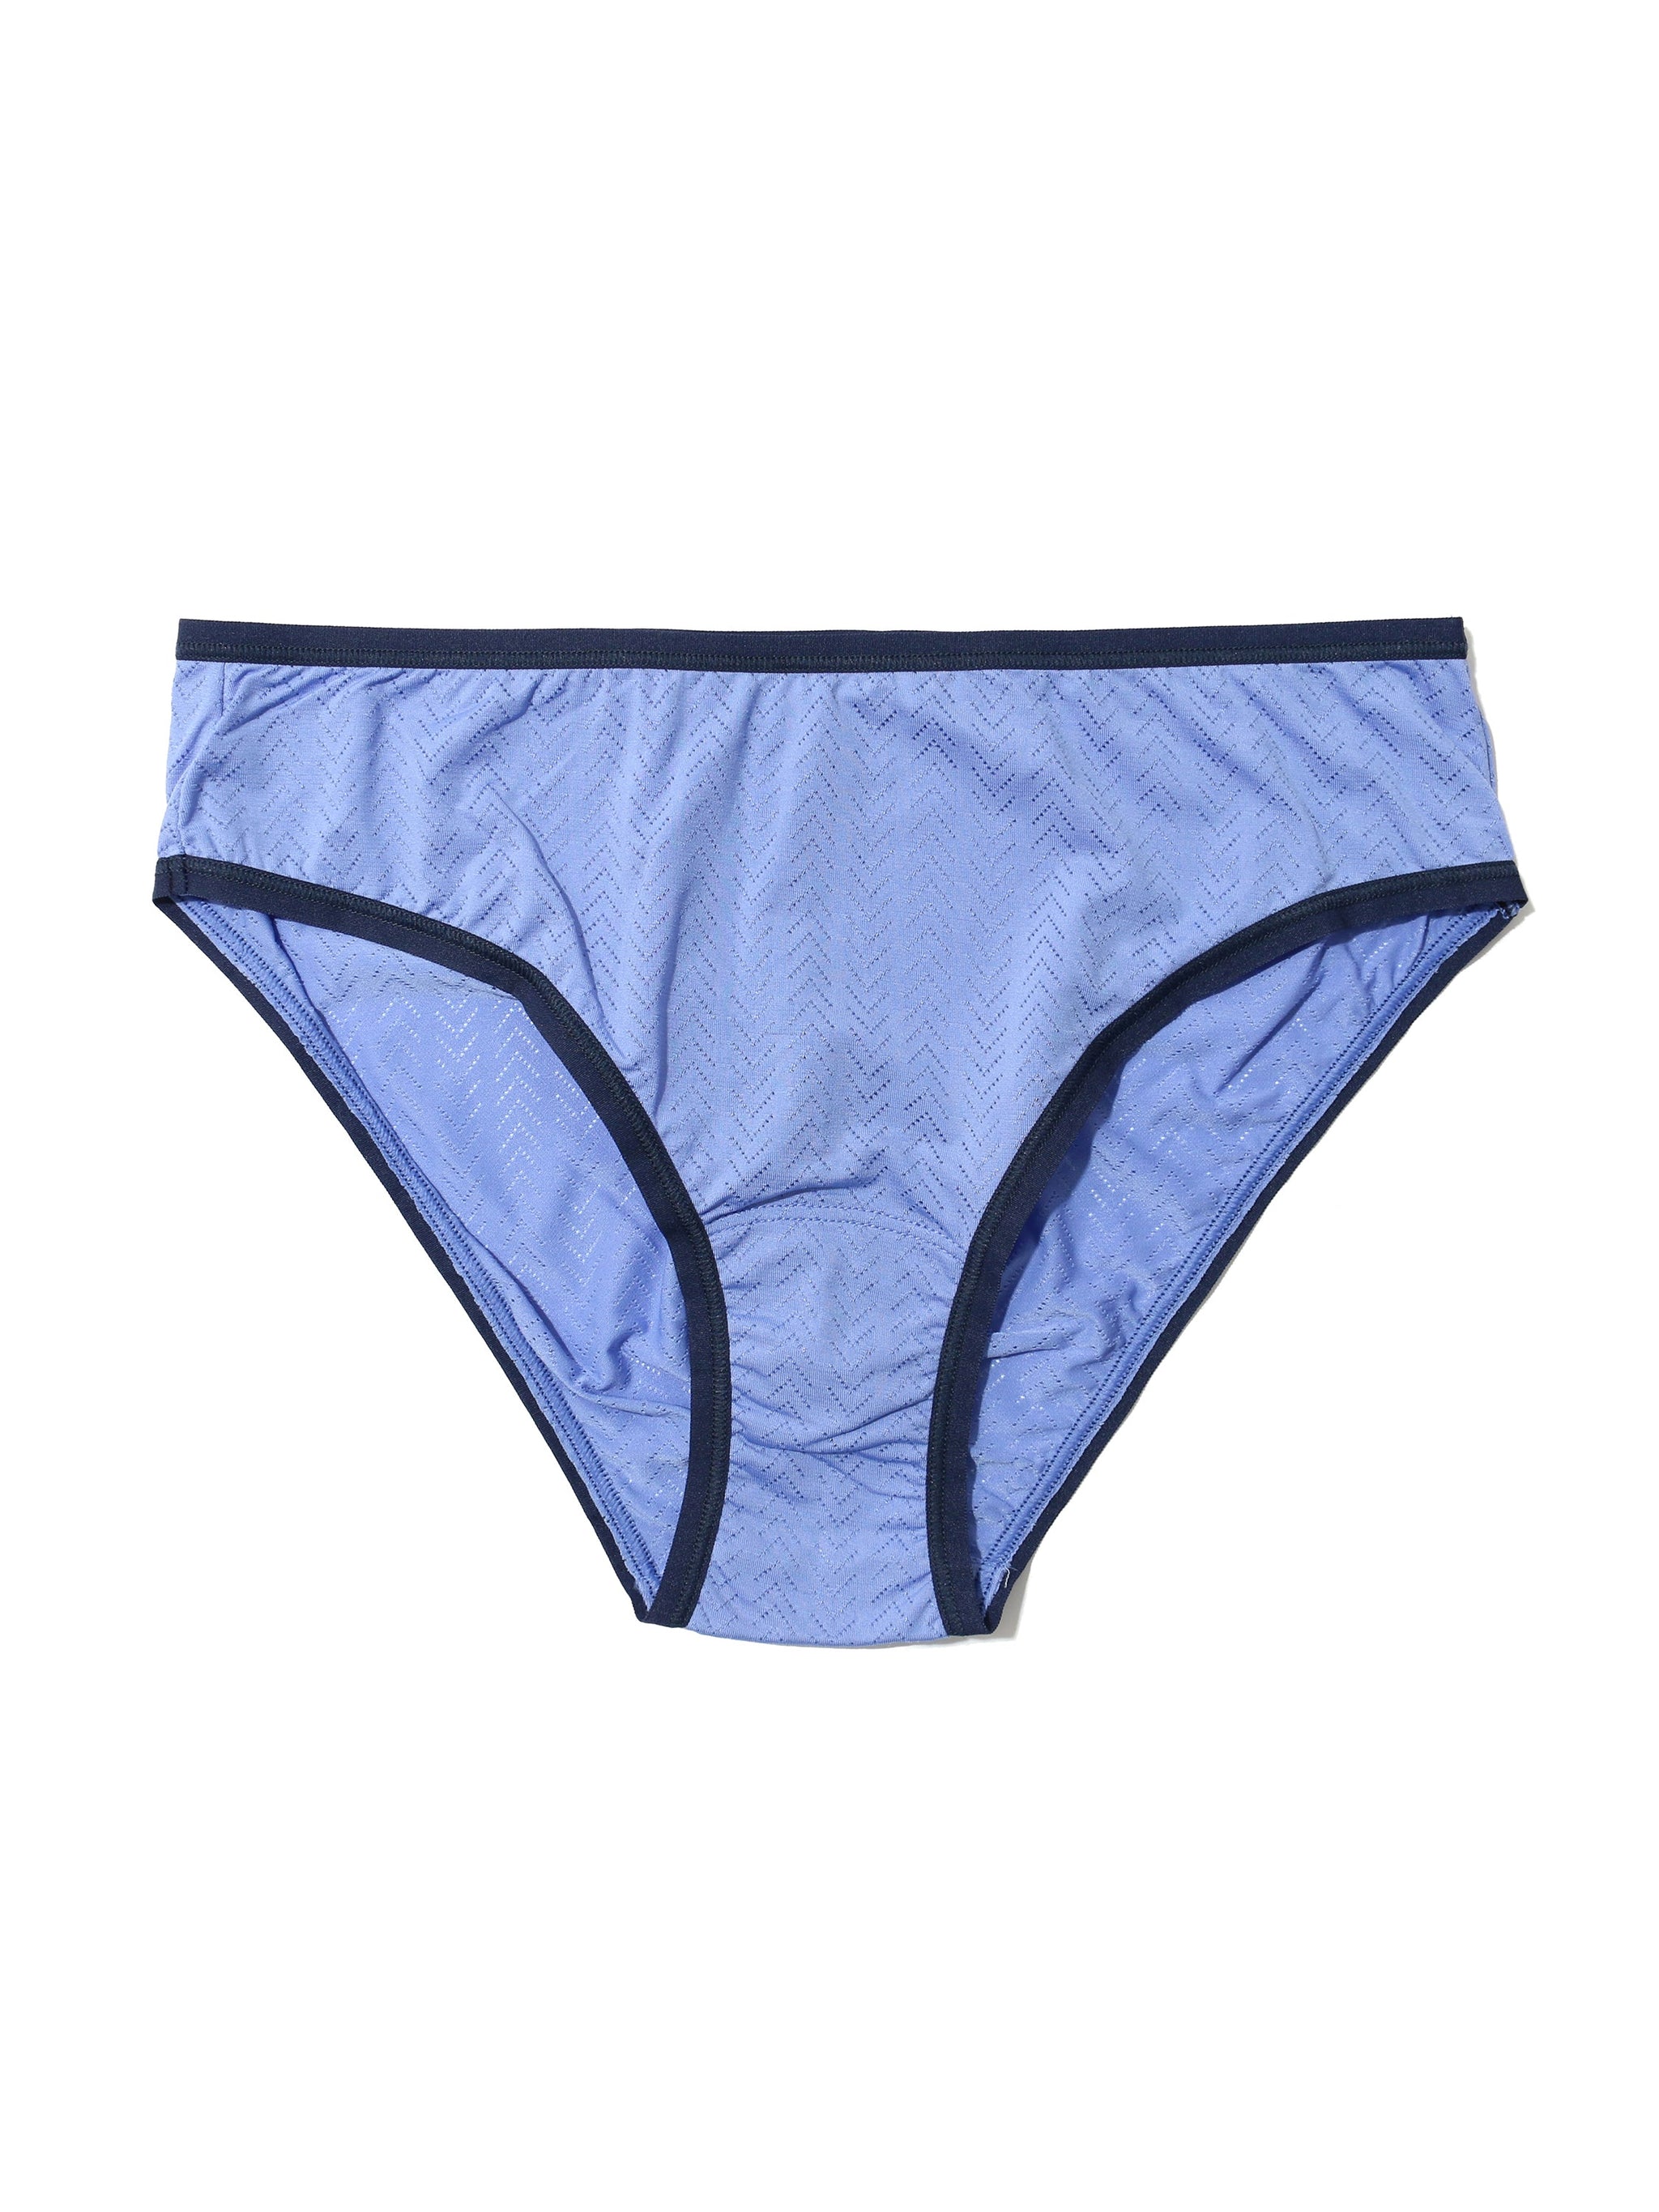 Jockey Life Men's String Bikinis Underwear, 100% Algeria